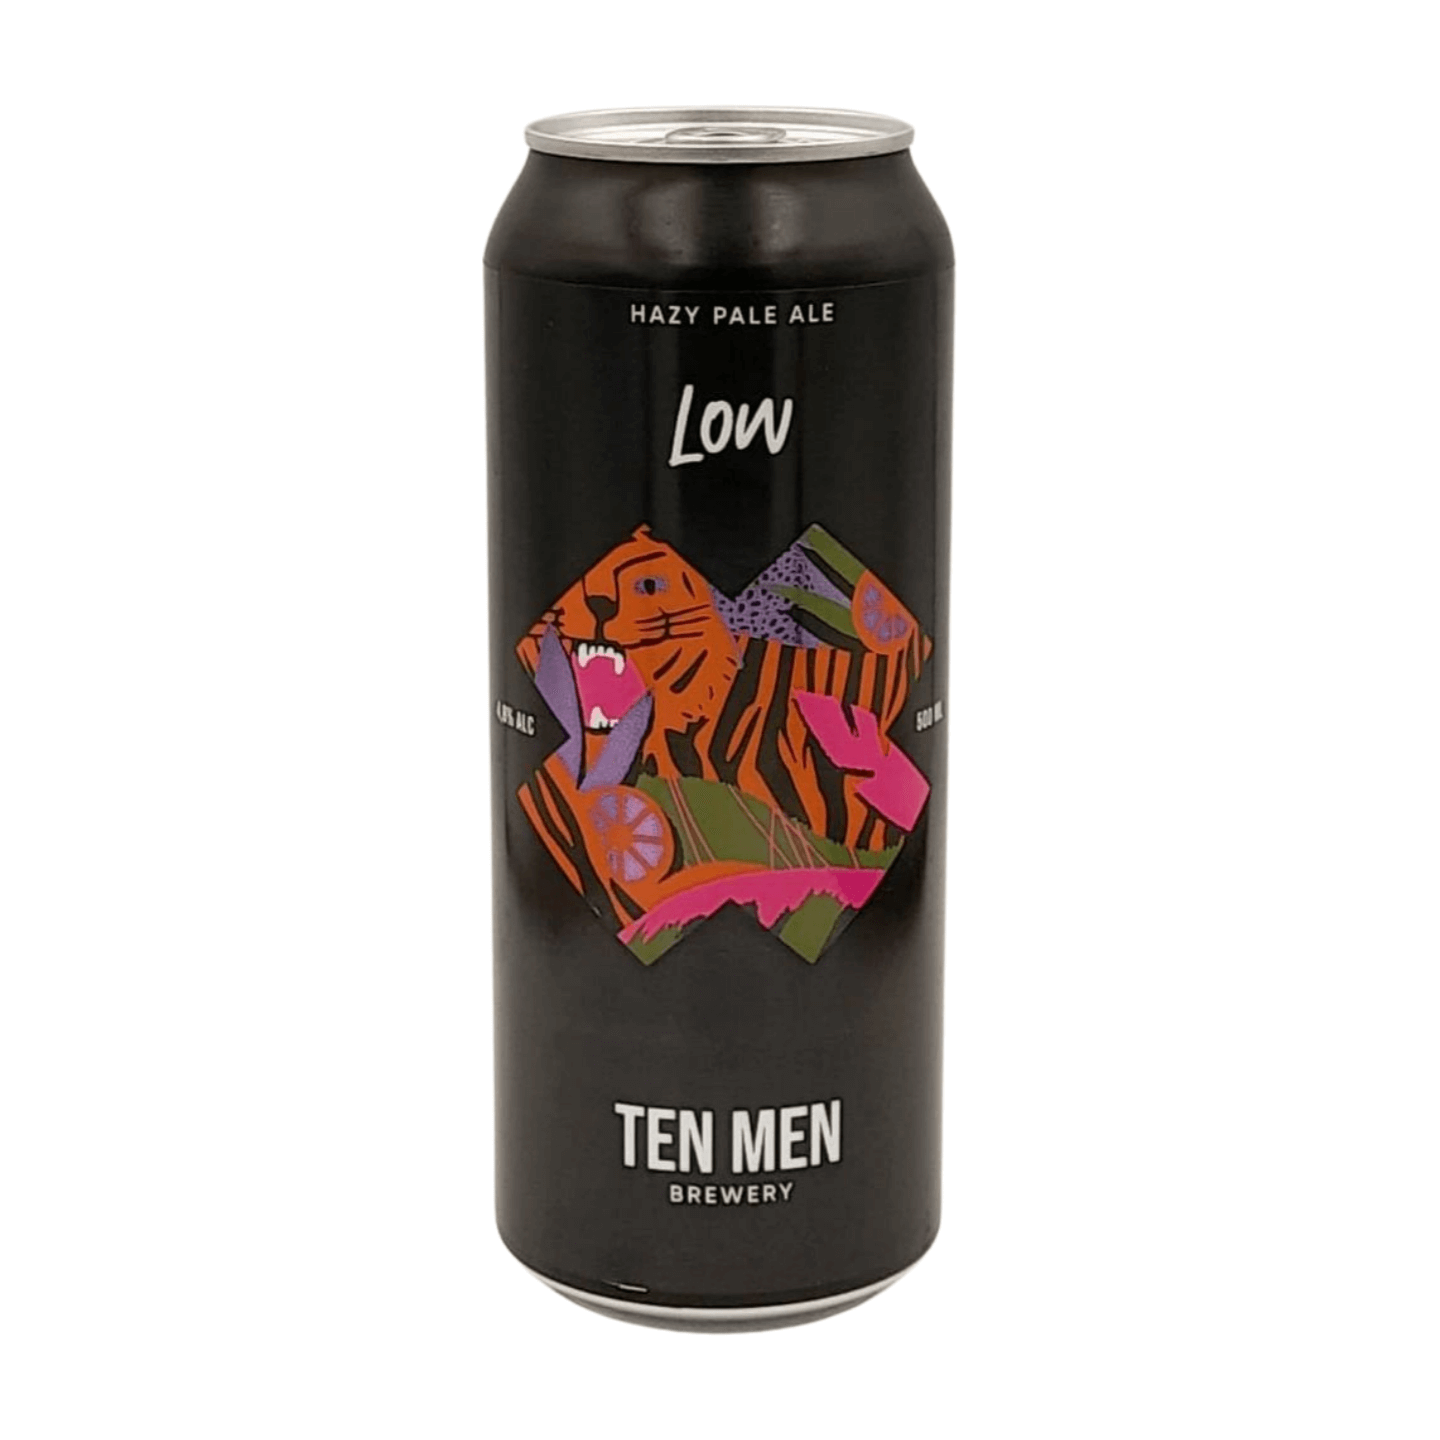 Ten Men Brewery LOW | Hazy Pale Ale Webshop Online Verdins Bierwinkel Rotterdam